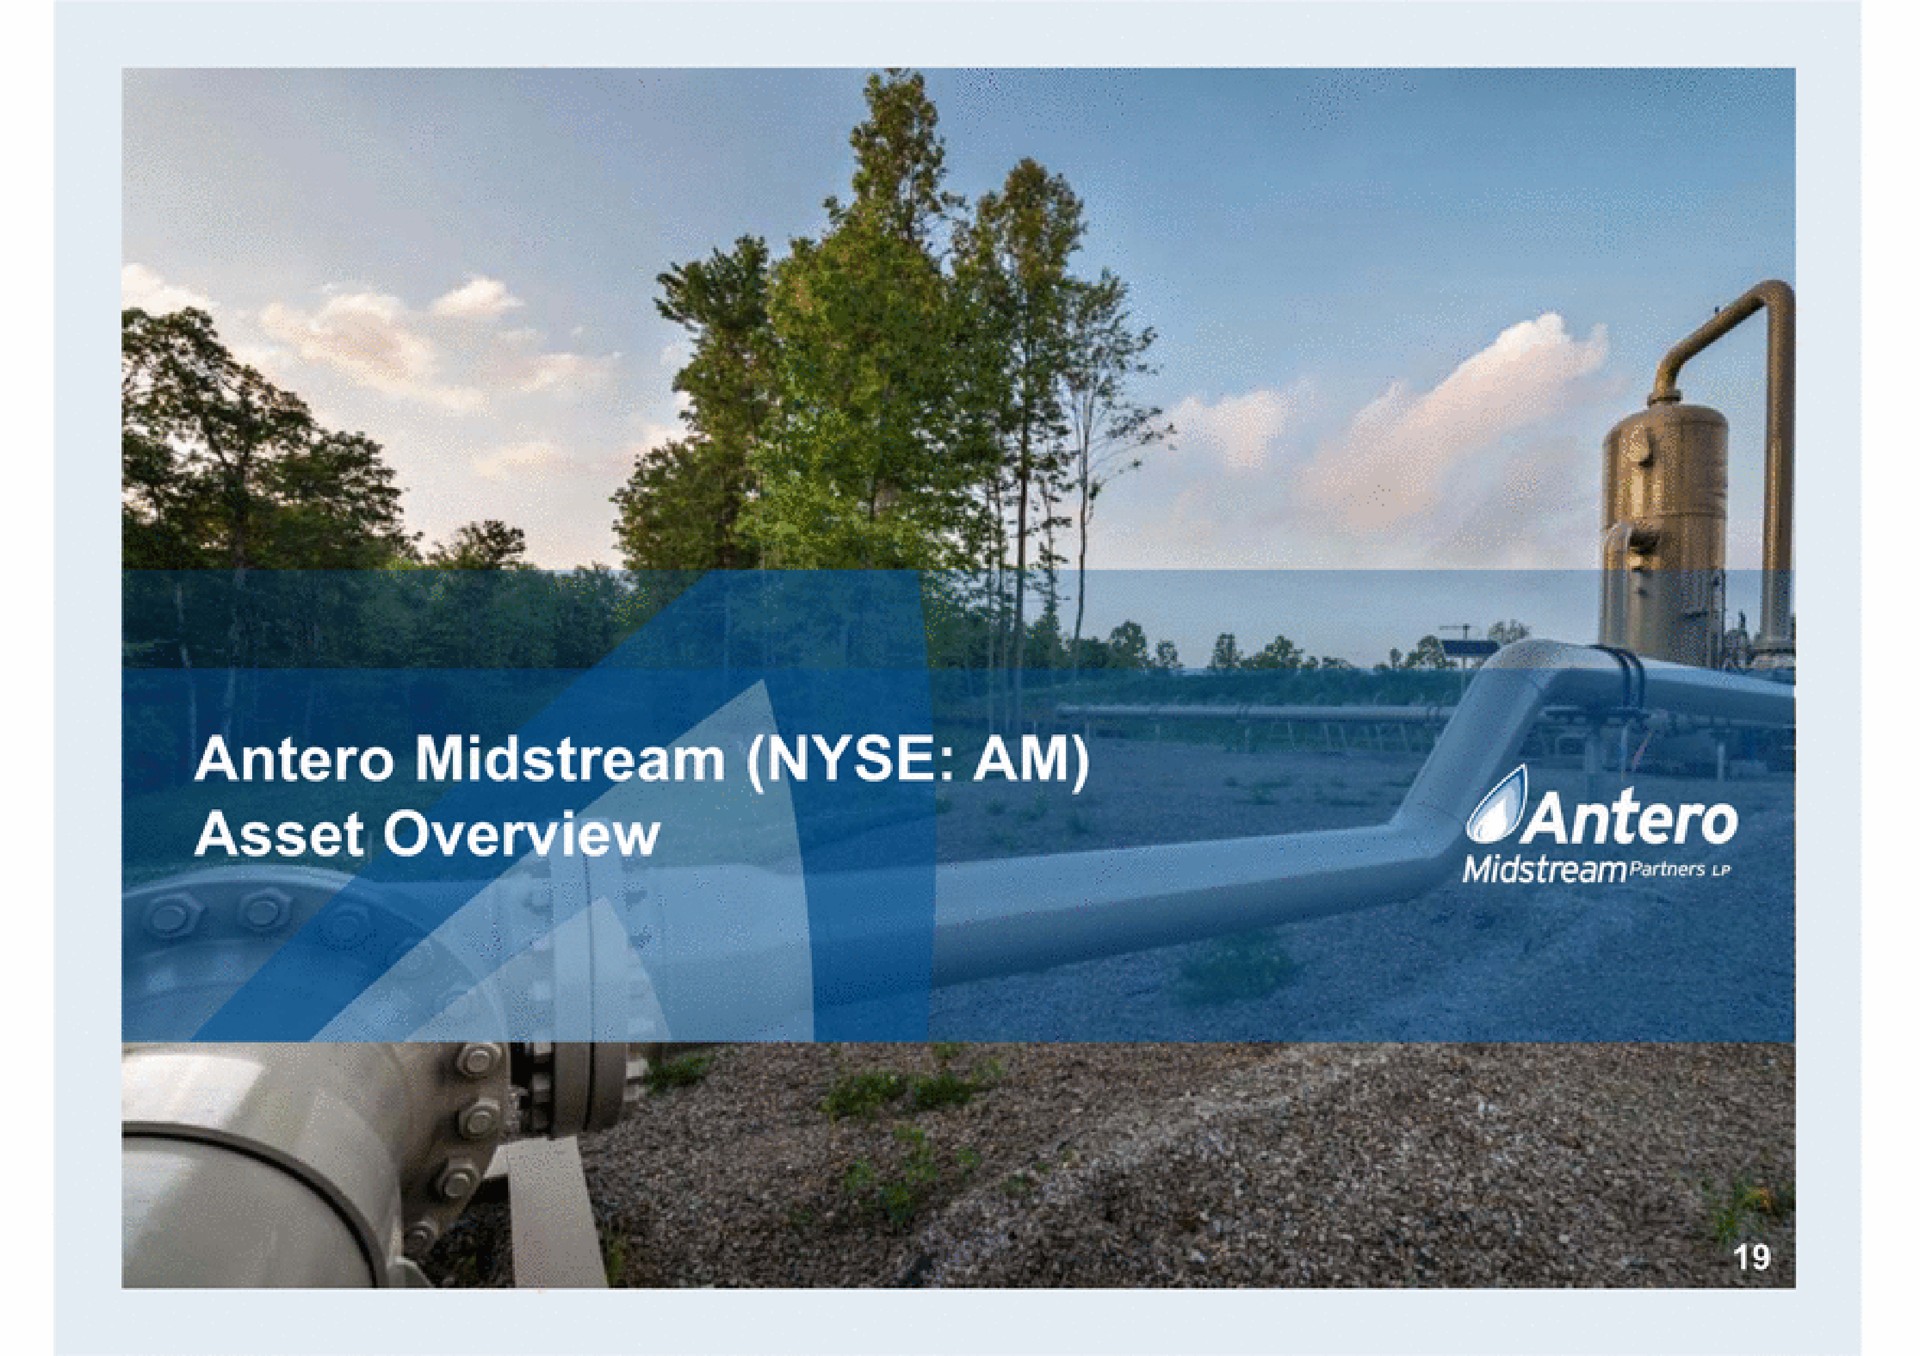 midstream am asset overview | Antero Midstream Partners